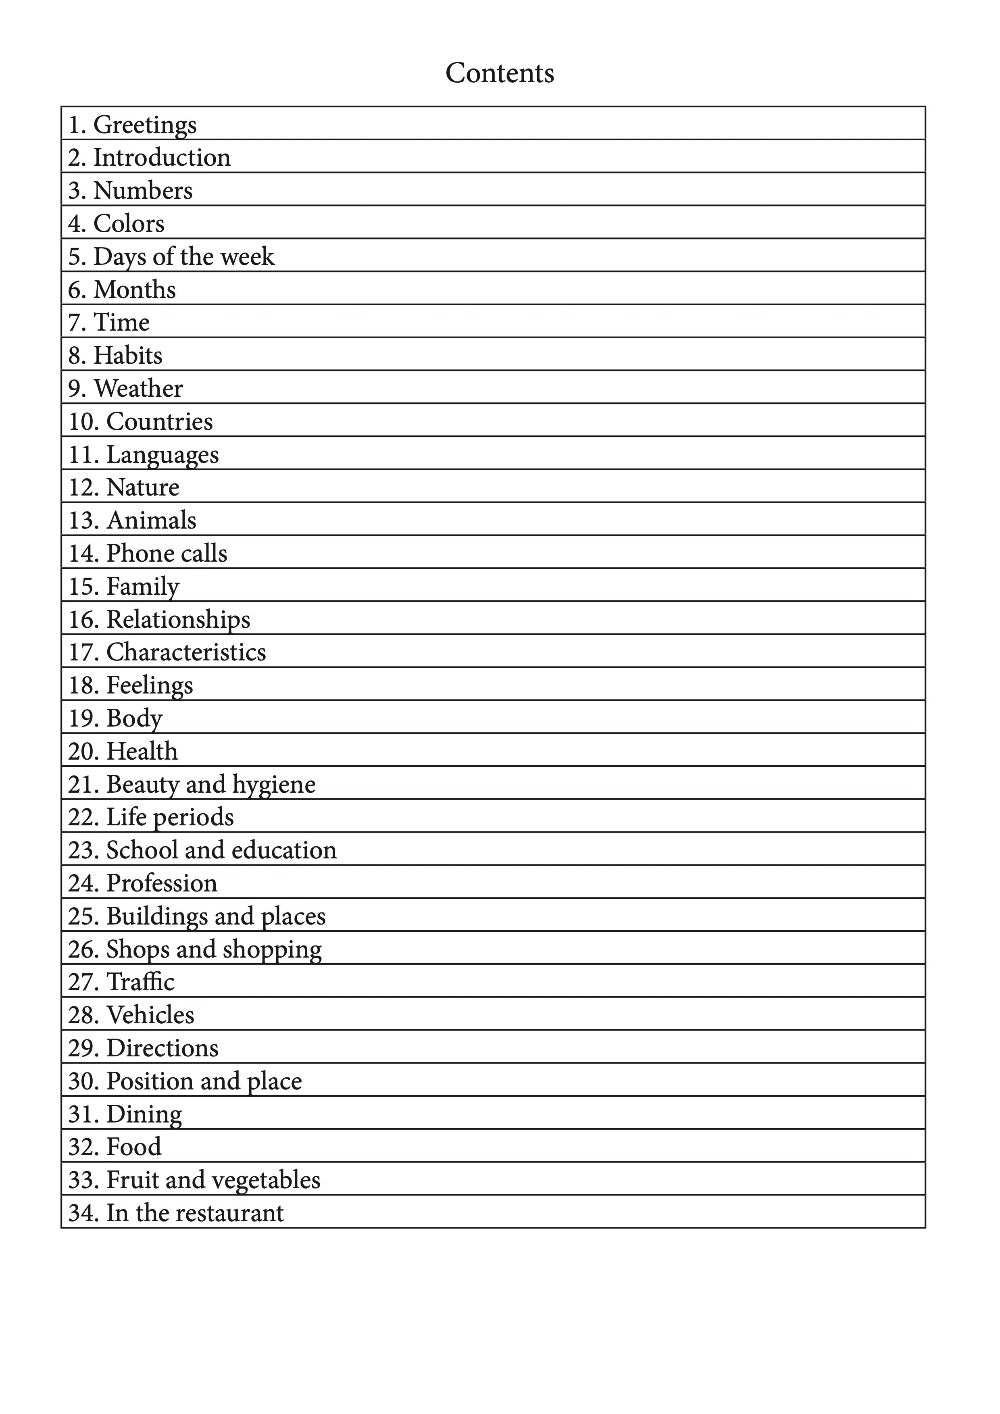 Moksha language learning notebook contents page 1